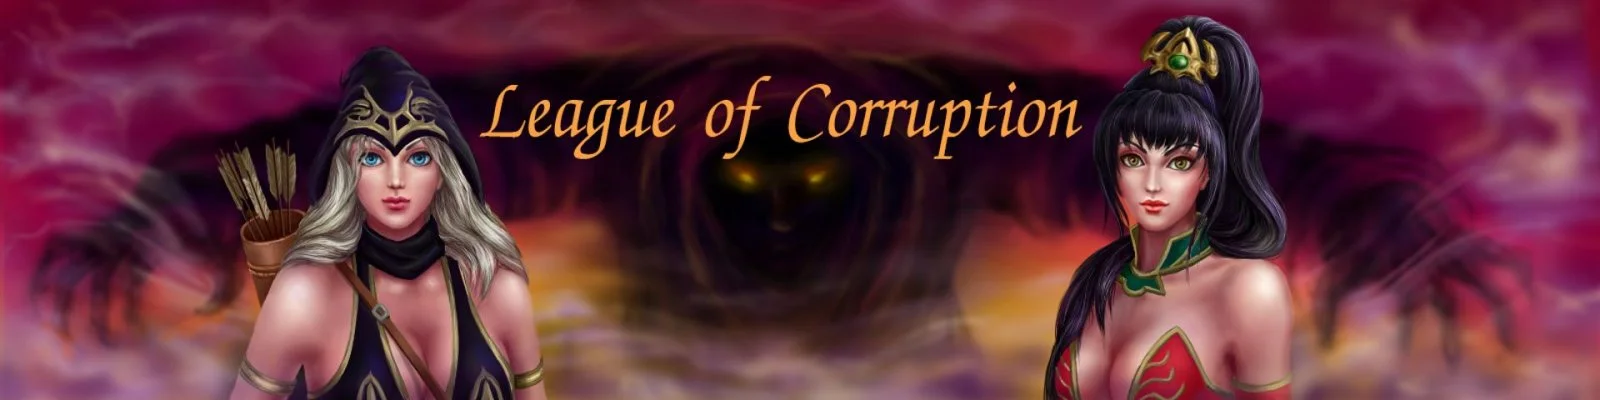 League of Corruption [v0.3.0b] main image